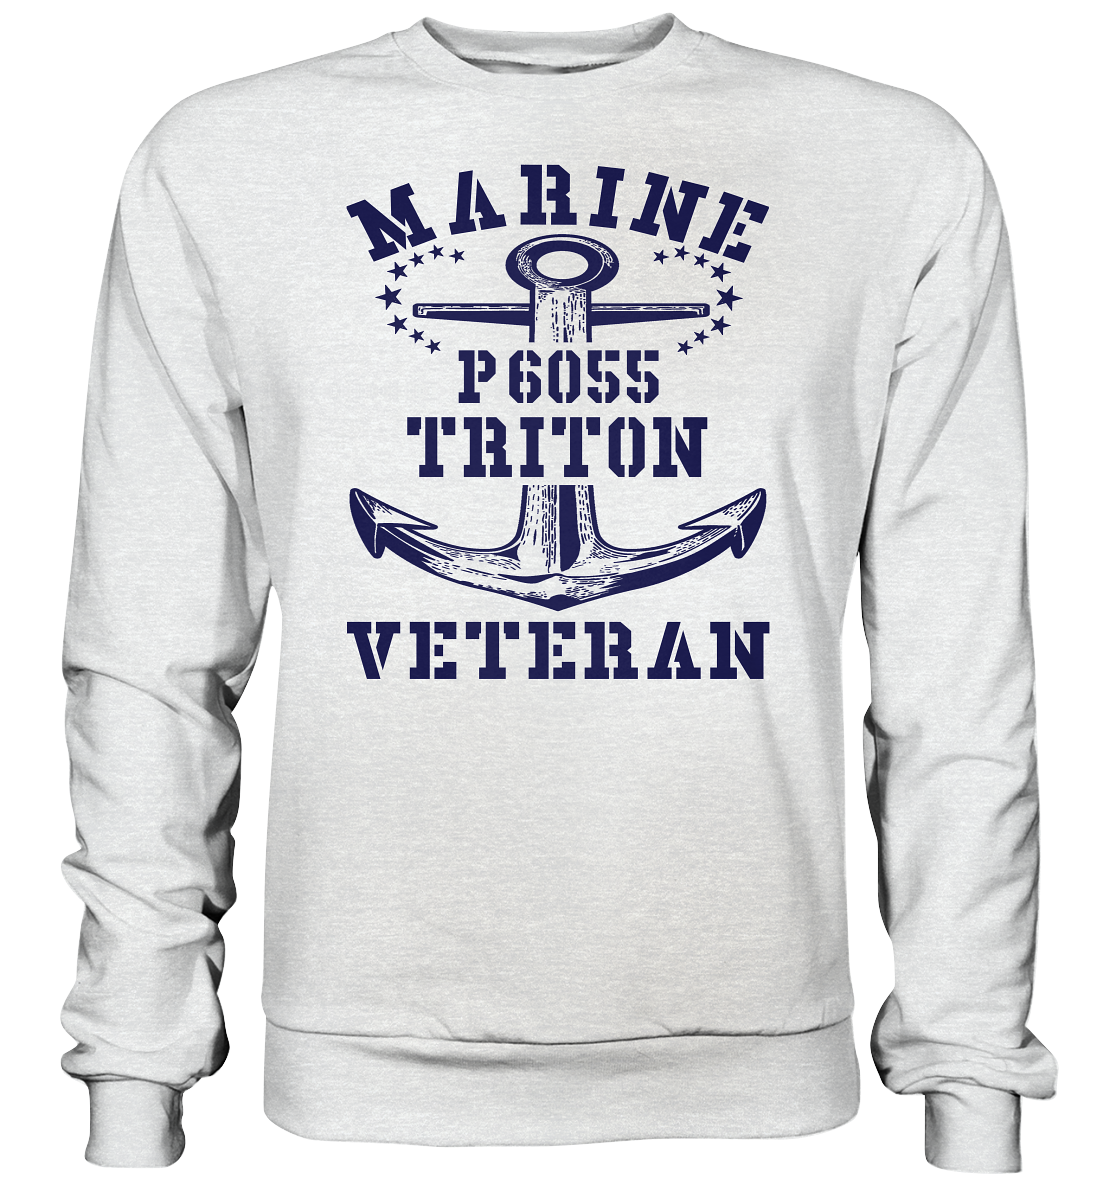 U-Jagdboot P6055 TRITON Marine Veteran - Premium Sweatshirt